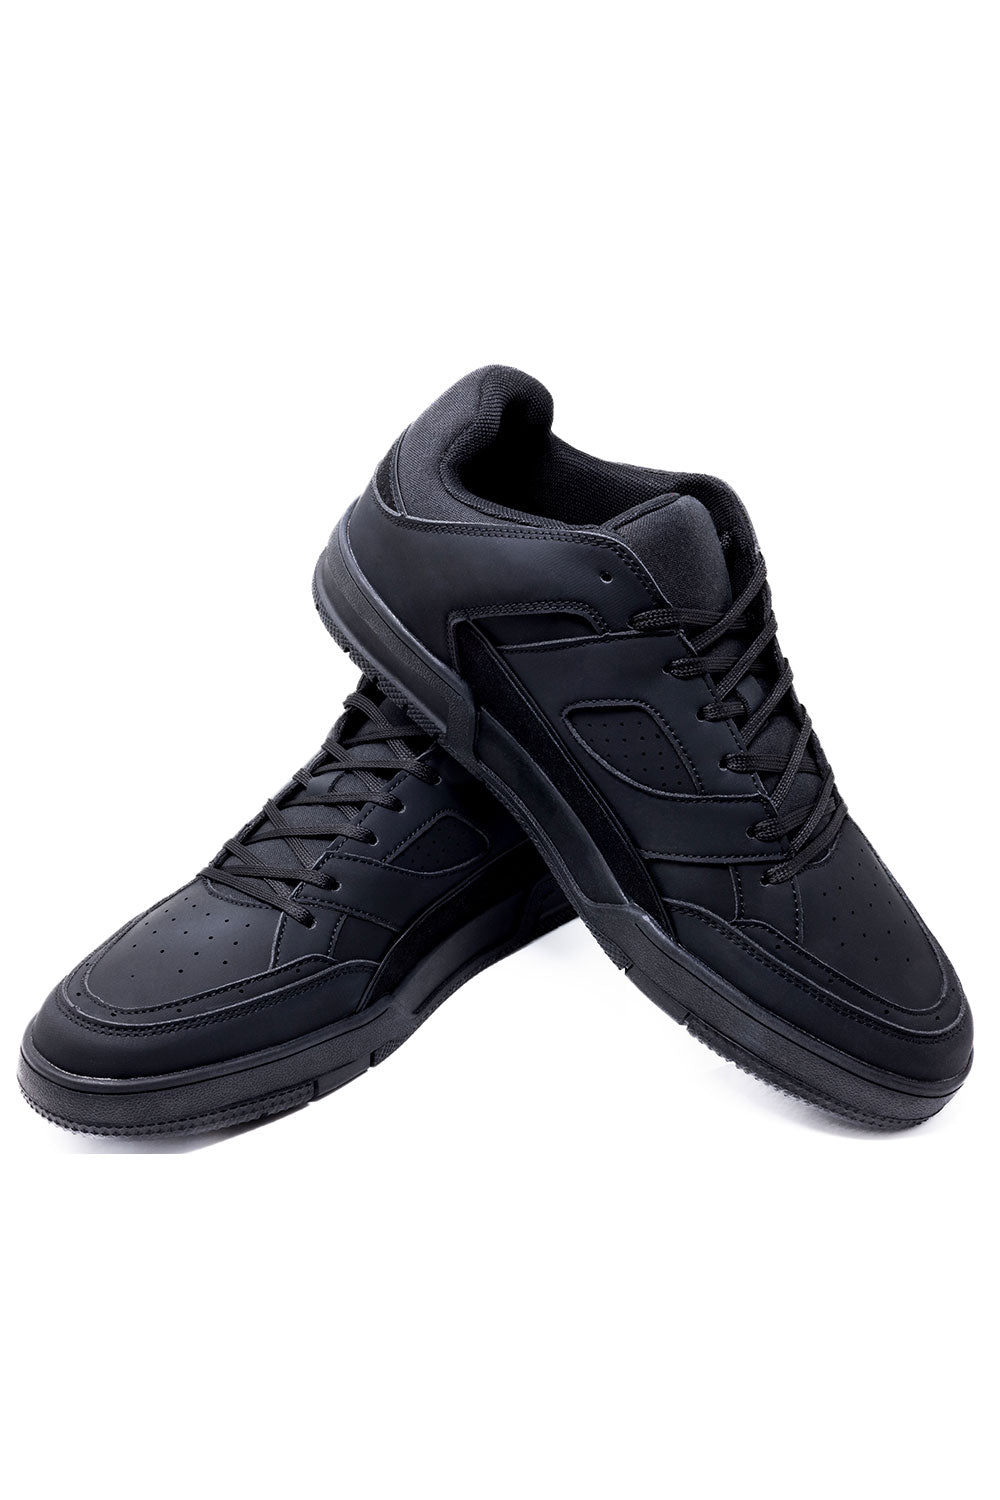 Barabas Men's Premium Running Multicolor Leather Sneakers 4SK01 Black